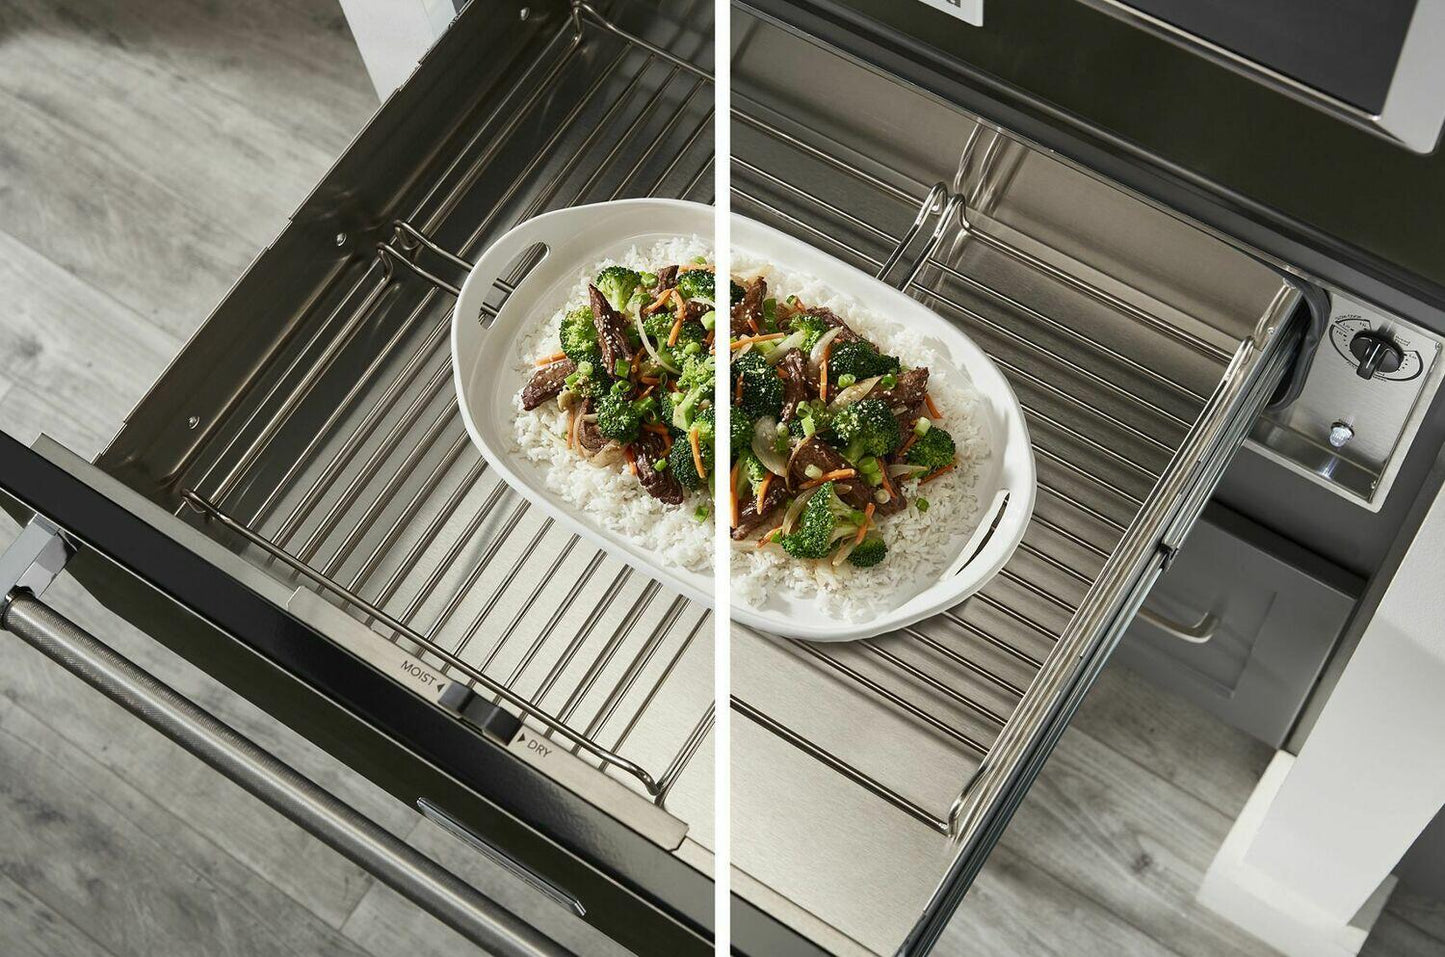 Kitchenaid KOWT100EBS 30'' Slow Cook Warming Drawer With Printshield&#8482; Finish - Black Stainless